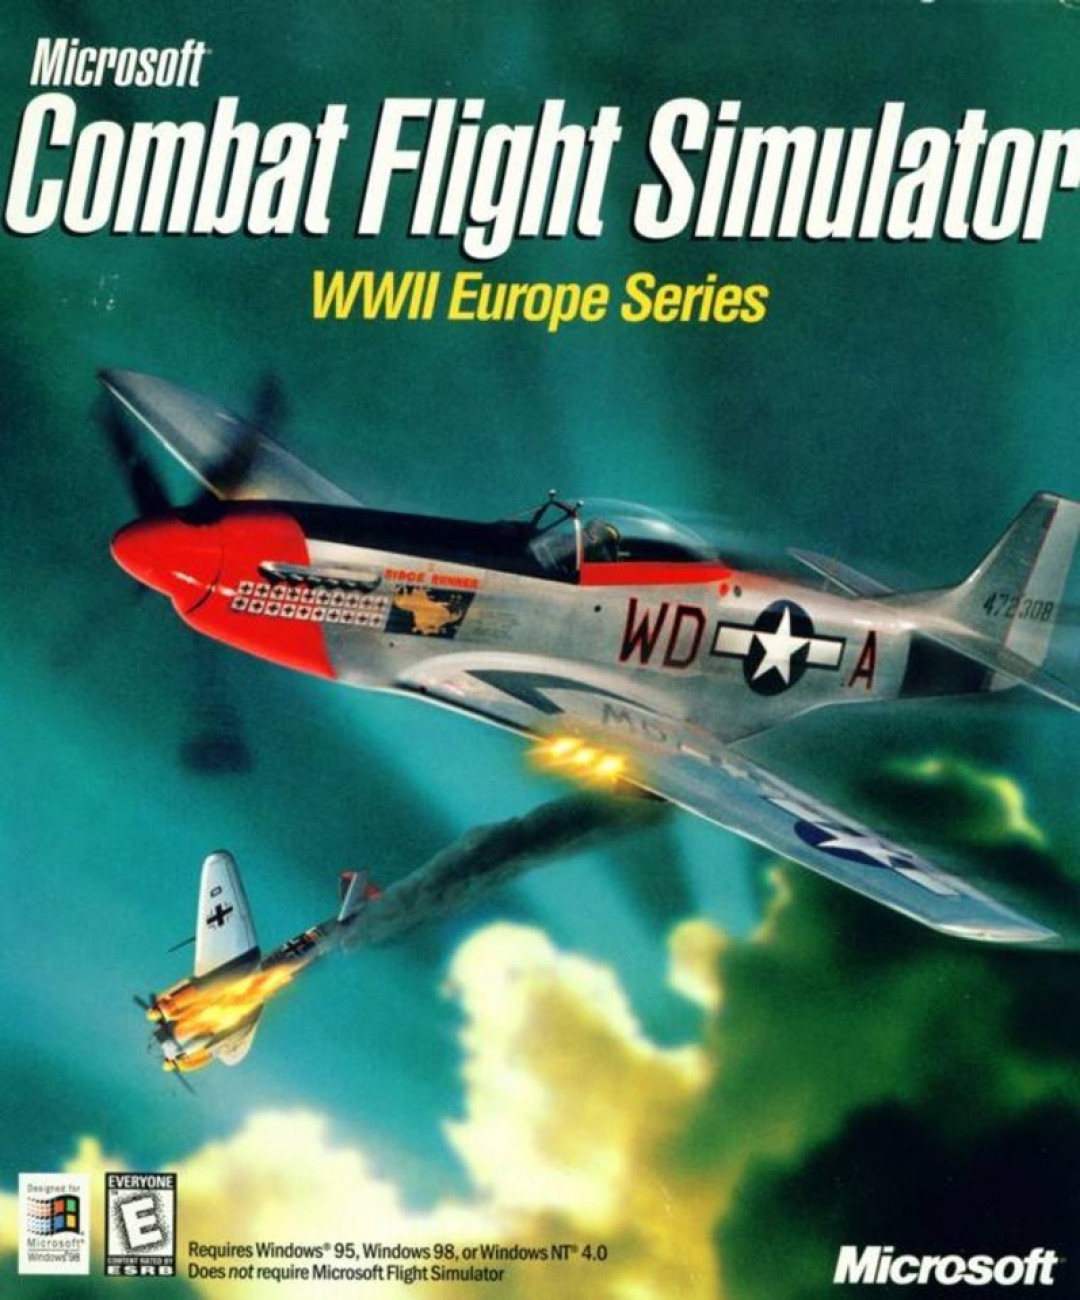 Pc Microsoft Combat Flight Simulator Wwii Europe Series The Schworak Site - roblox velocity flight simulator with xbox 360 controller